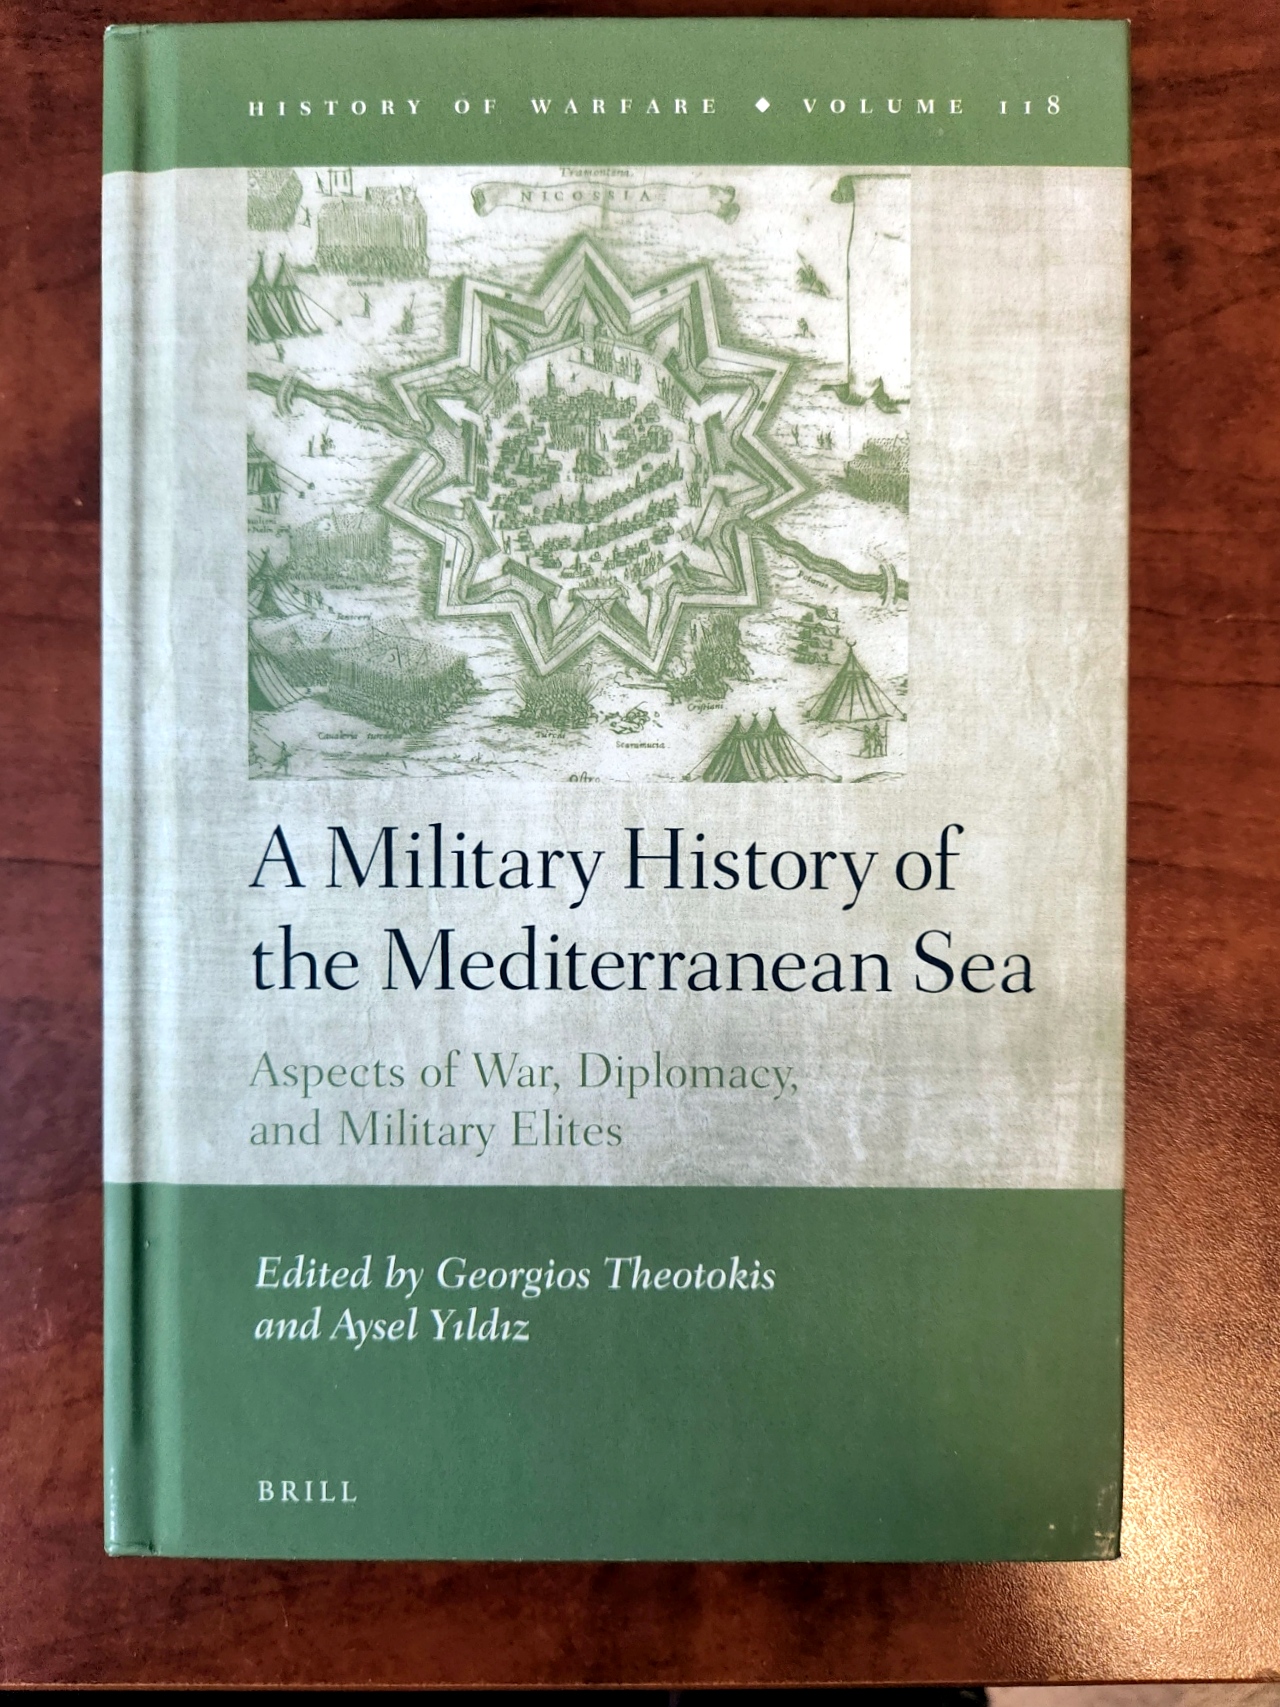 A MILITARY HISTORY OF THE MEDITERRANEAN SEA, ASPECTS OF WAR, DIPLOMACY, AND MILITARY ELITES - Theotokis, Georgios & Yildiz, Aysel (Eds.)